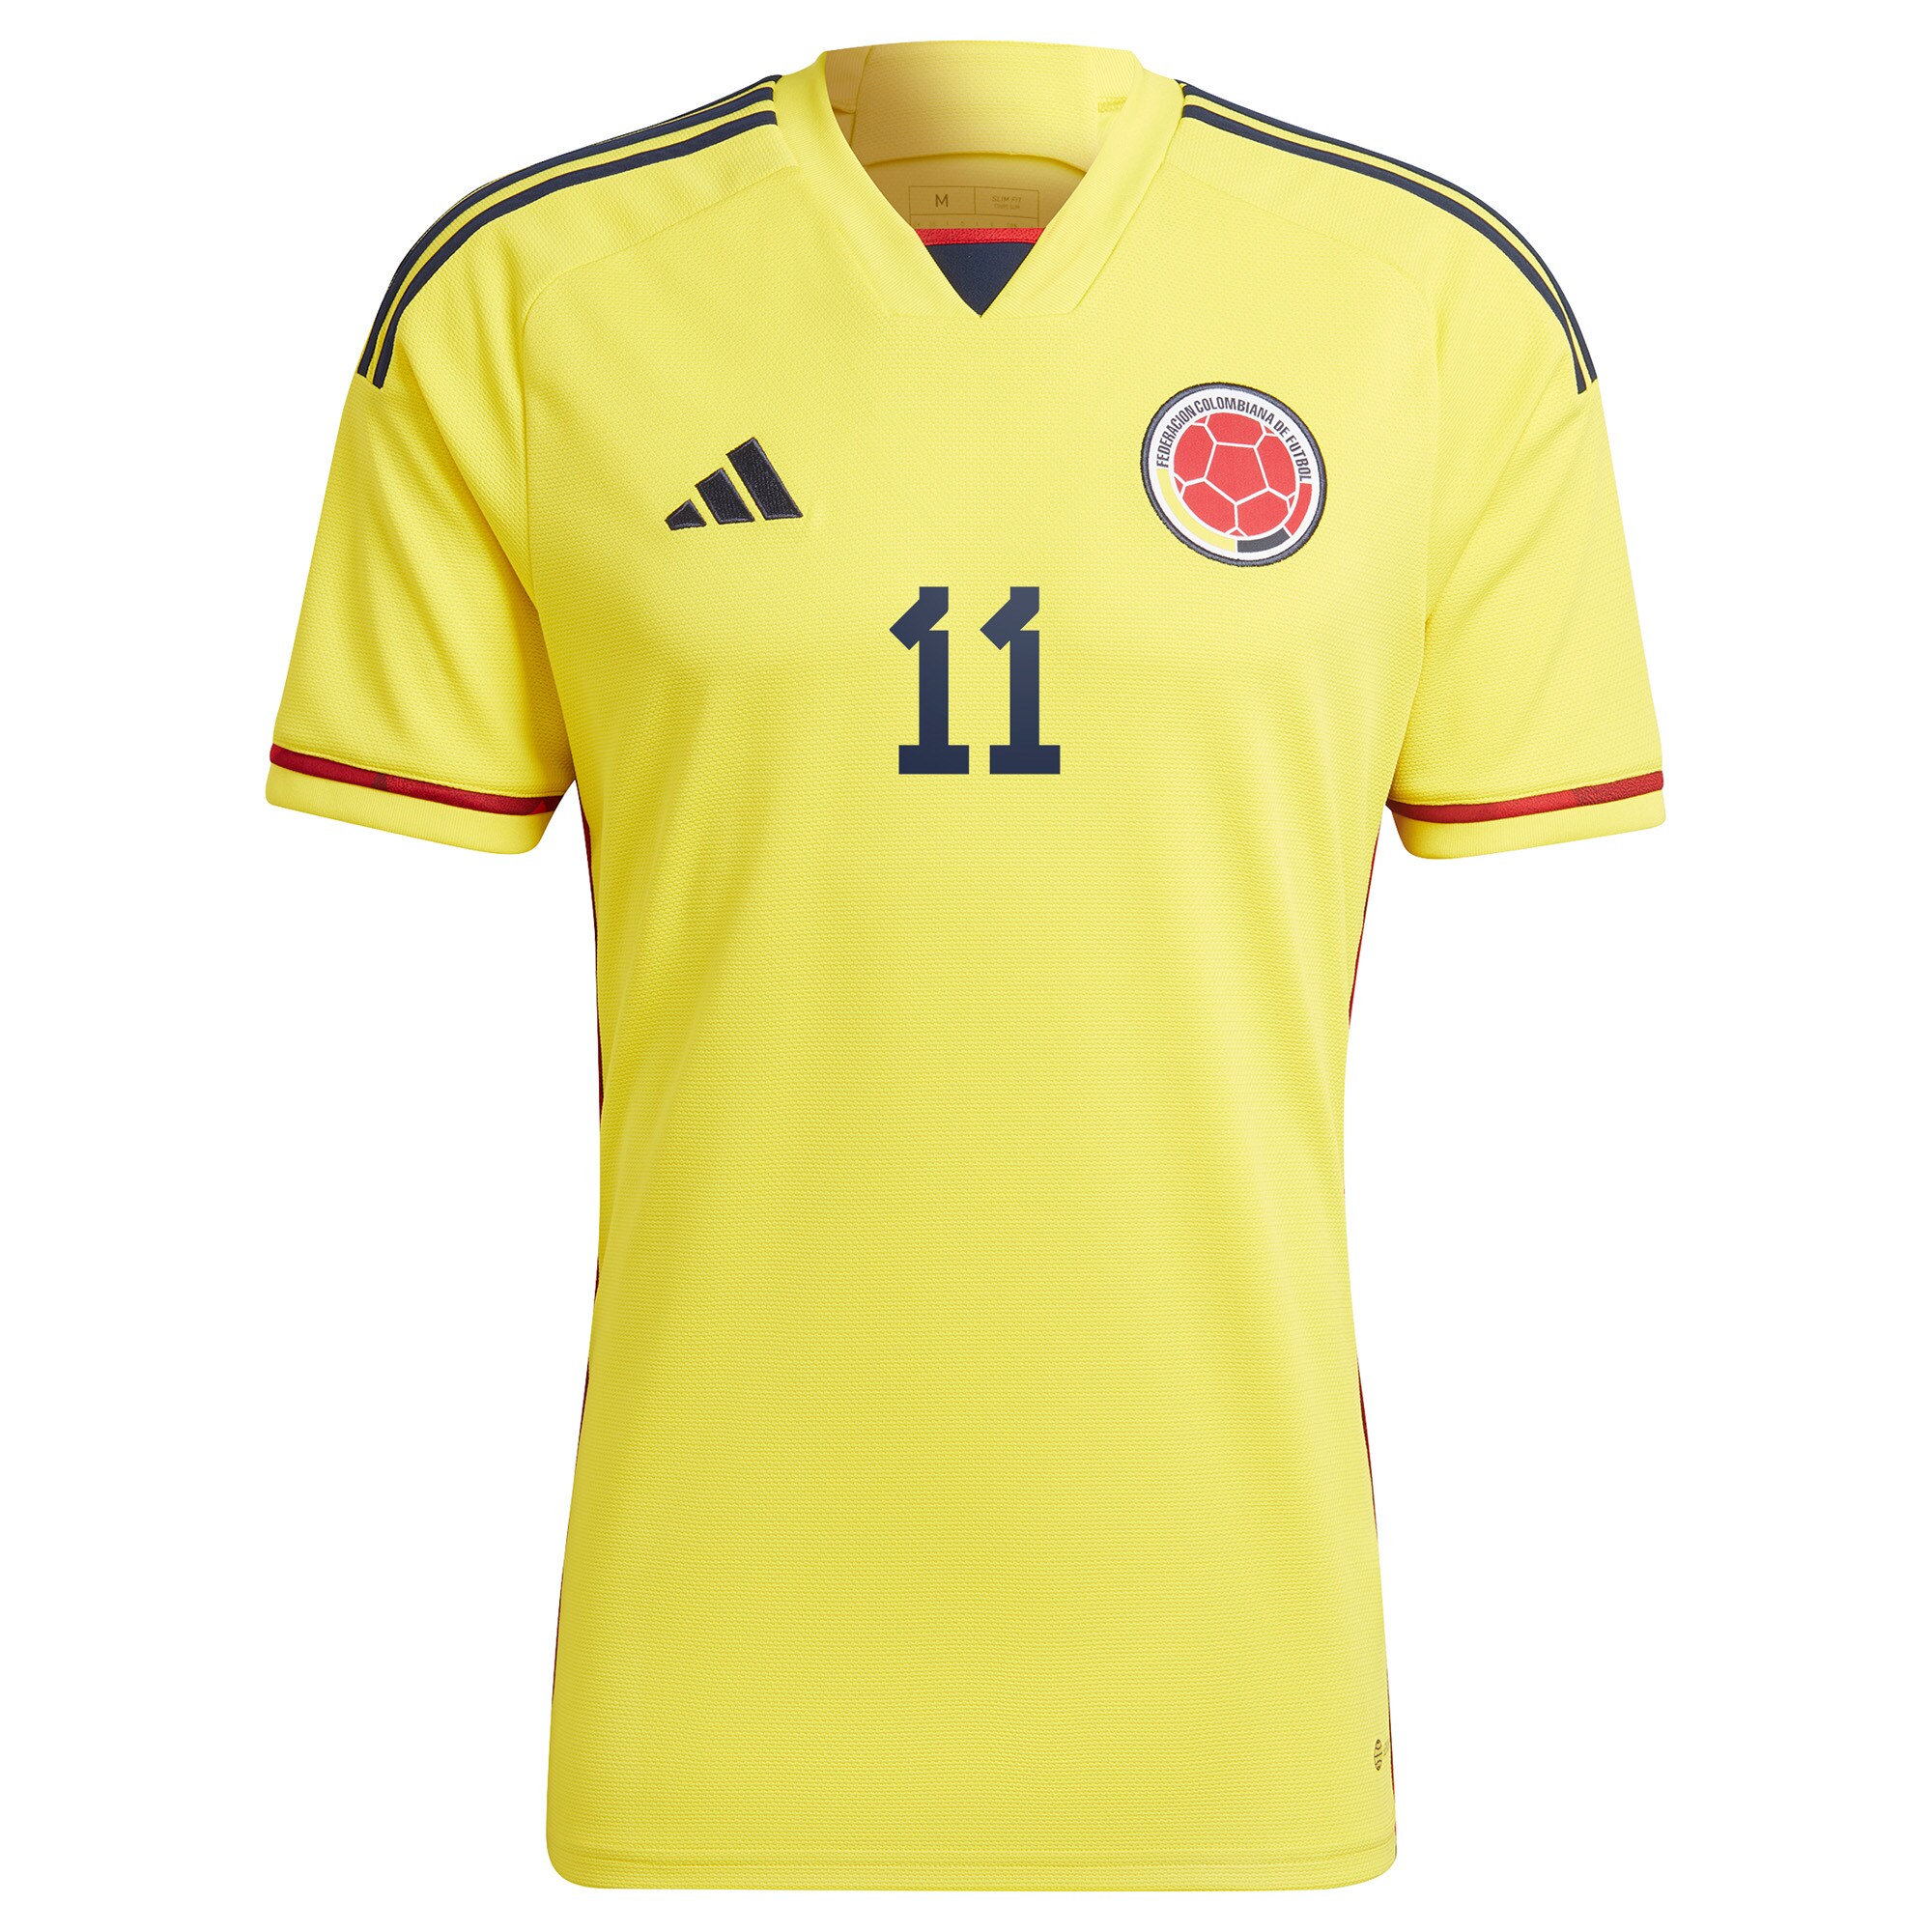 Juan Cuadrado Colombia National Team 2022/23 Home Player Jersey